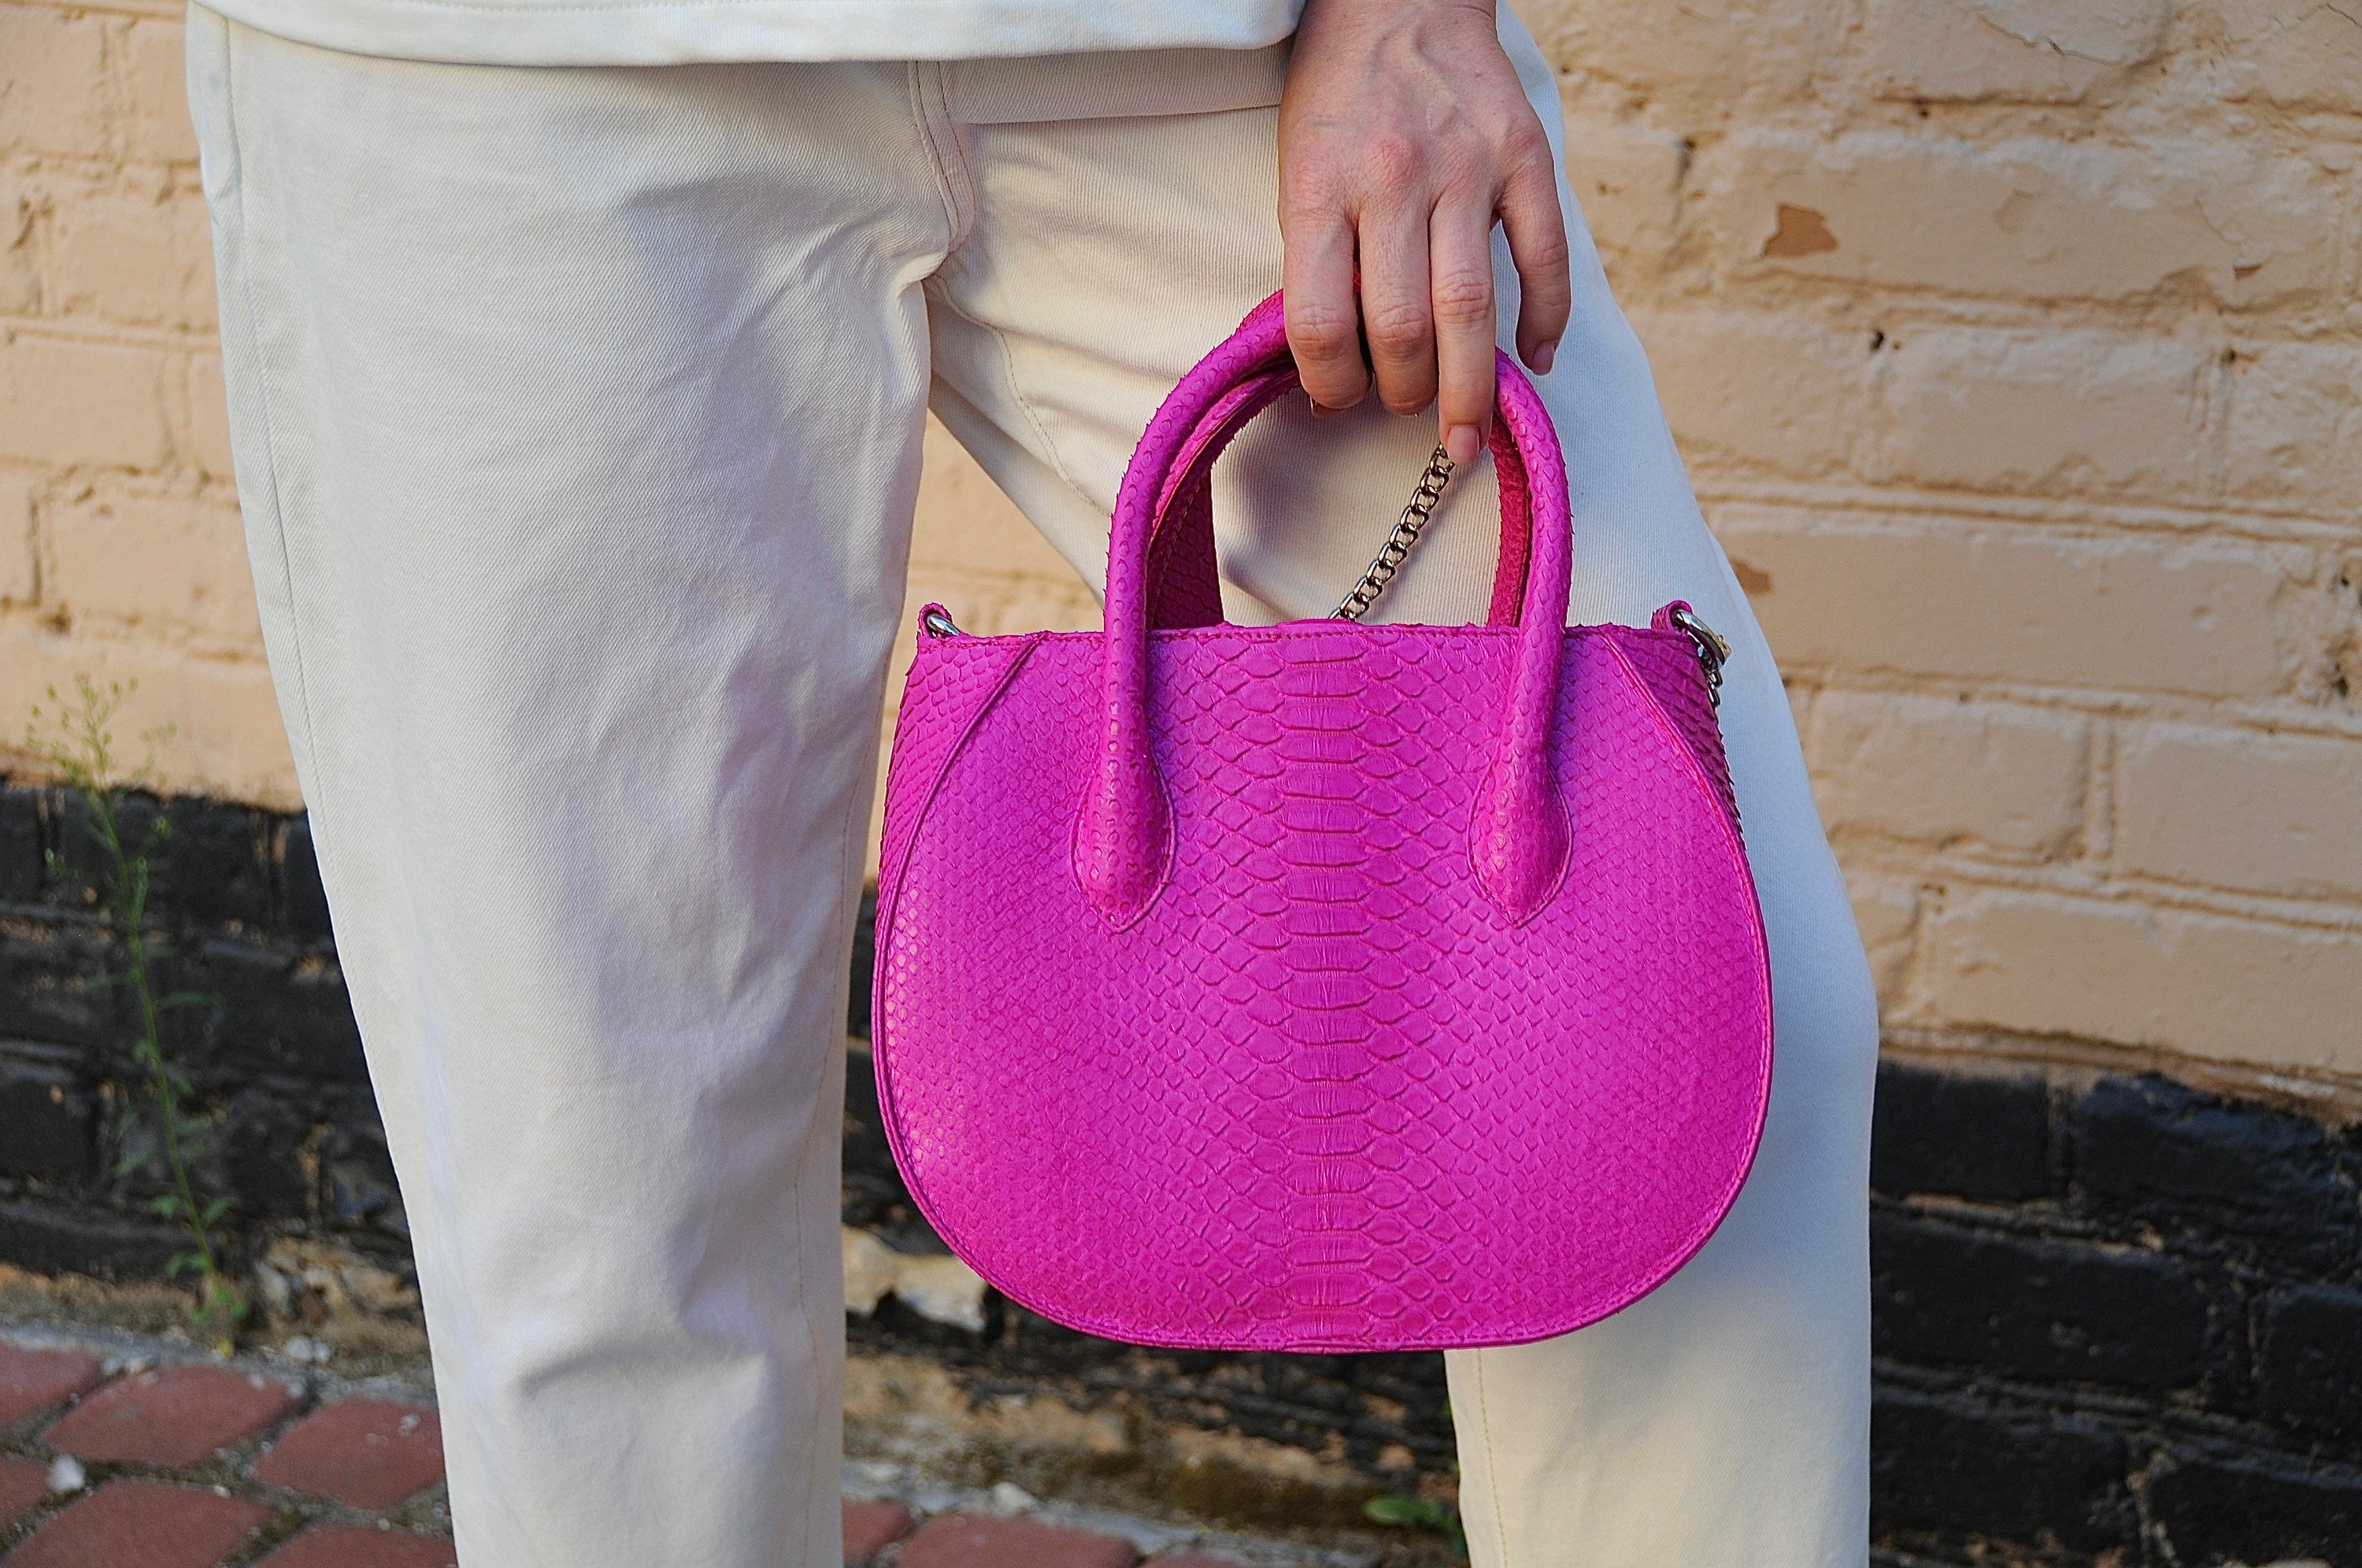  Fuchsia Colorful Genuine Snakeskin Purse Woman Satchel Top  Handle Handbags : Handmade Products